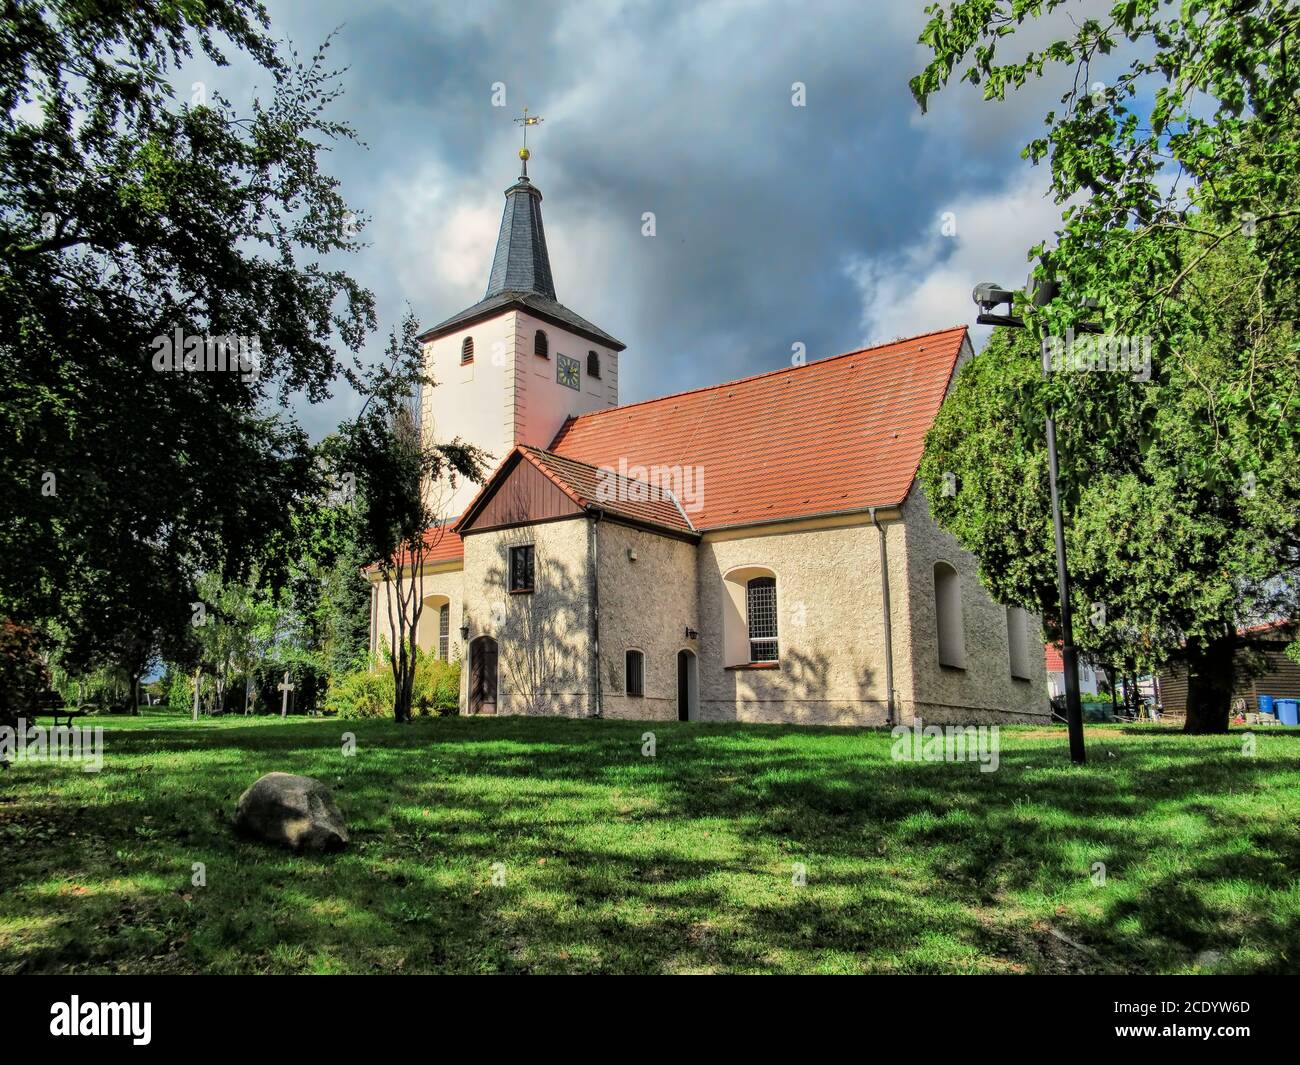 diedersdorf, germany - old village church in diedersdorf Stock Photo